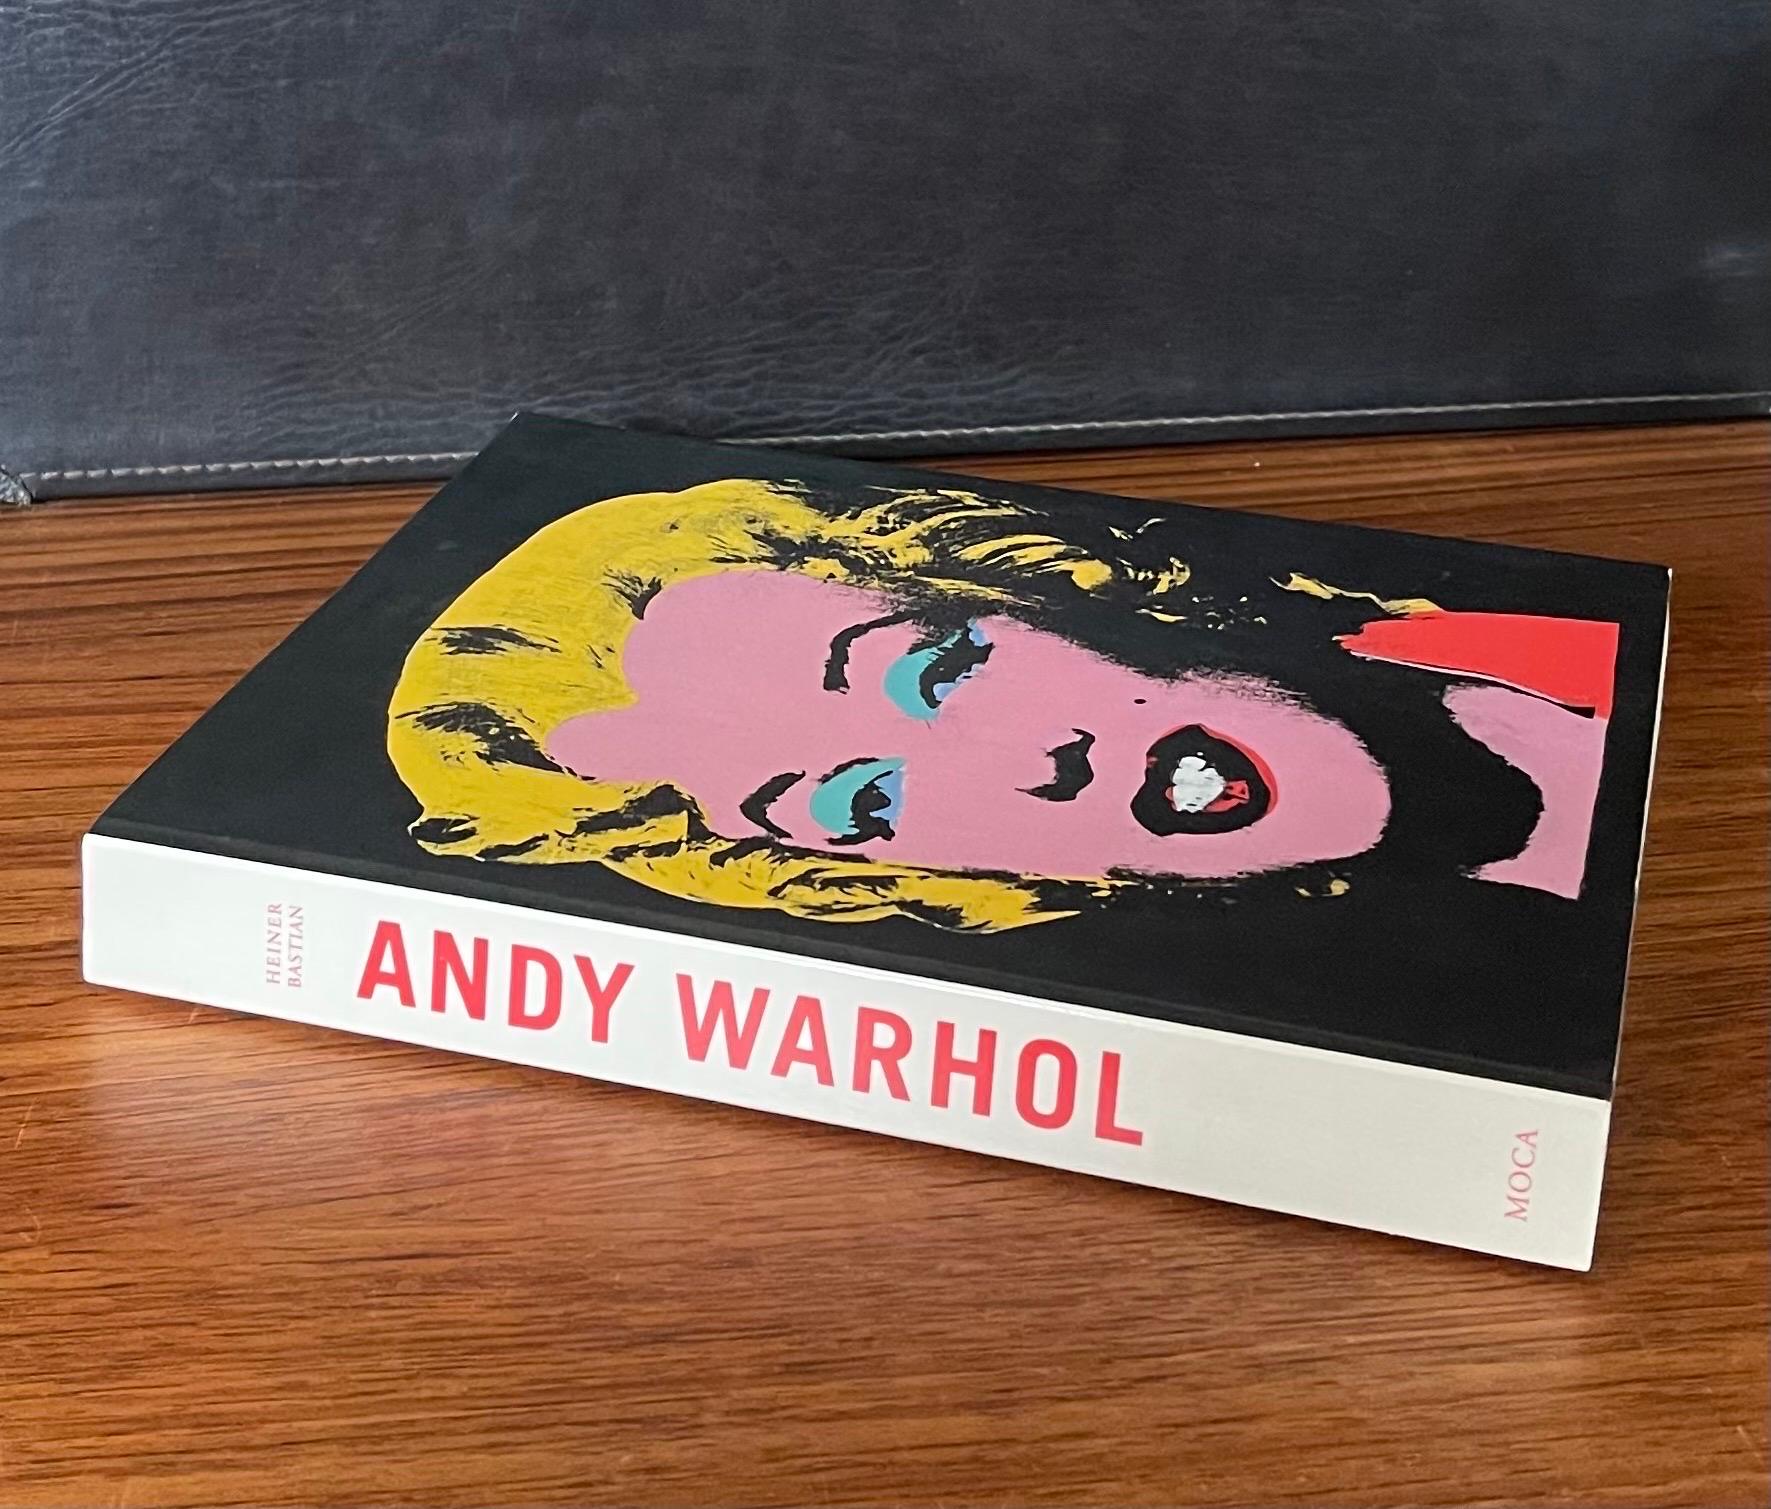 Livres d'art rétrospectifs et programmes d'expositions Moca LA 2002 de Warhol en vente 6